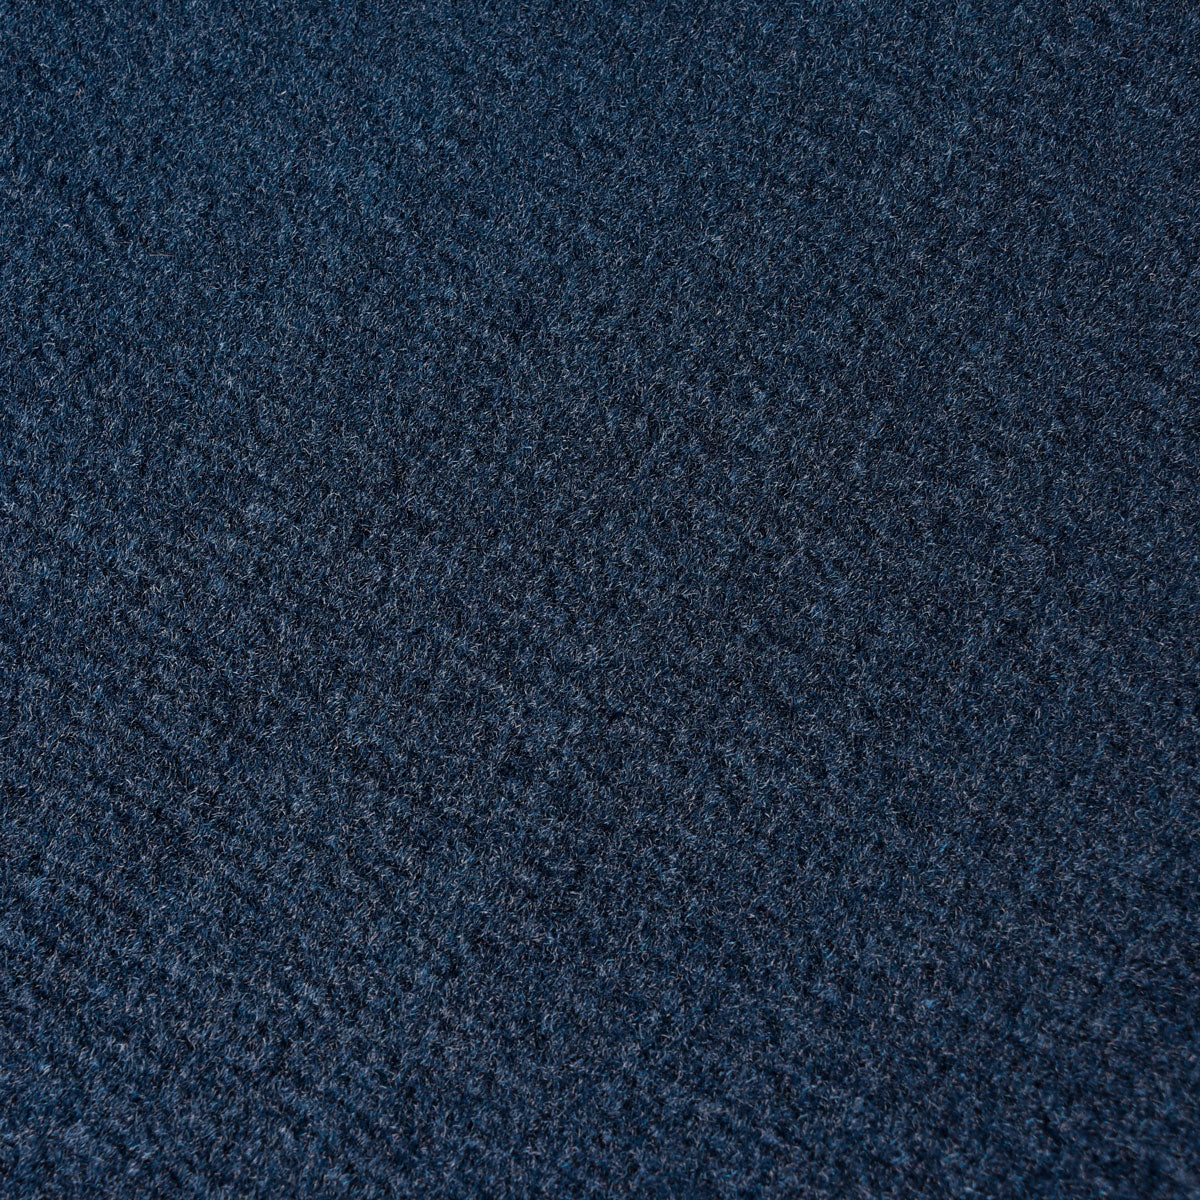 Marine Carpet Ultra Blue 6074-6